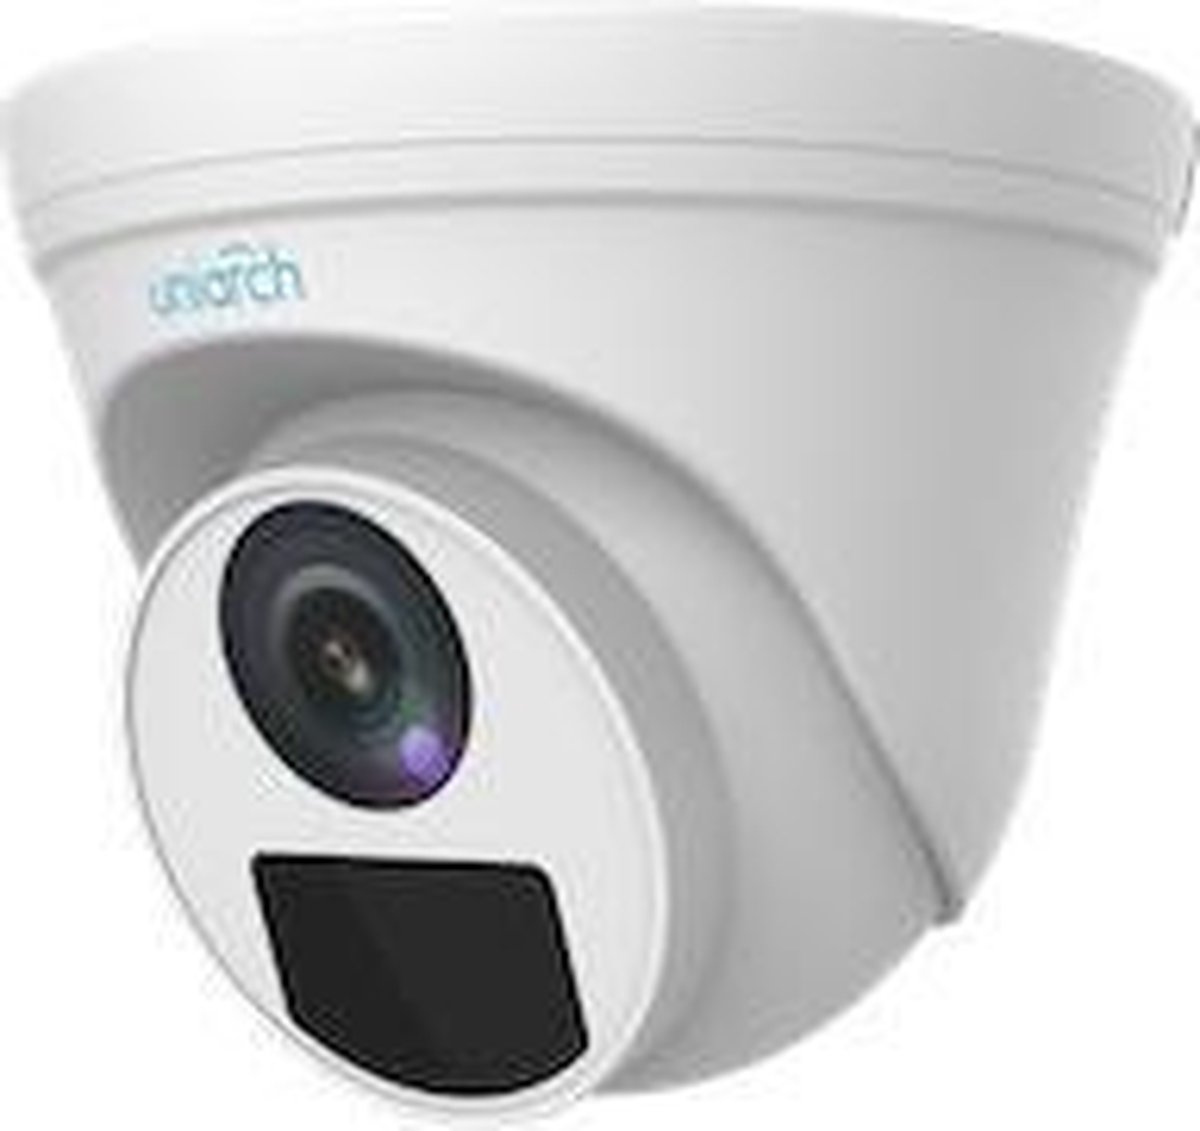 Uniarch IPC-T114-PF28 Full HD 4MP buiten turret camera met 30m Smart IR, WDR, PoE - Beveiligingscamera IP camera bewakingscamera camerabewaking veiligheidscamera beveiliging netwerk camera webcam